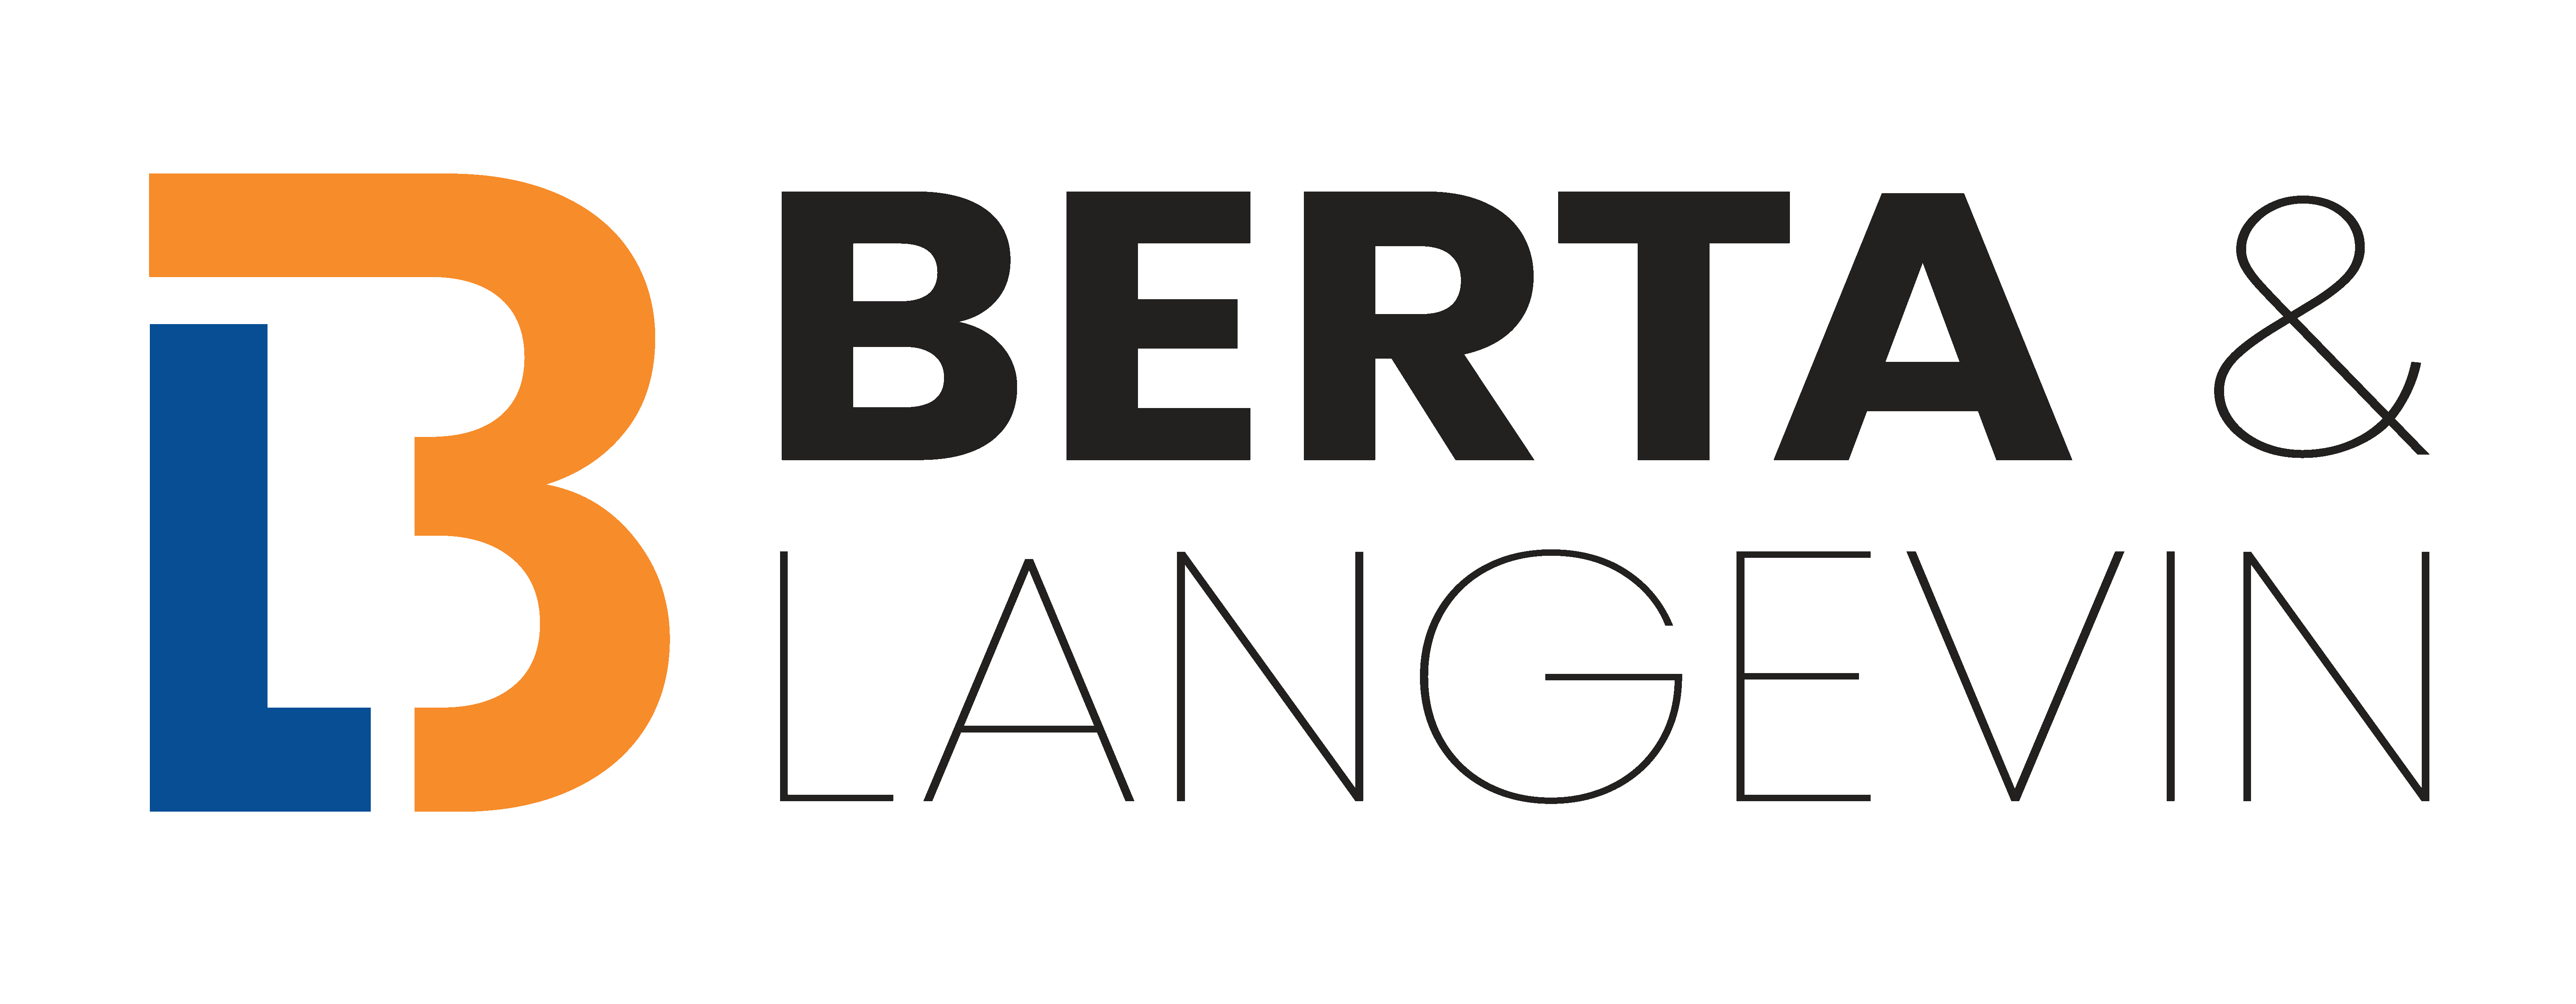 BERTA-LANGEVIN_Logo_H_HD